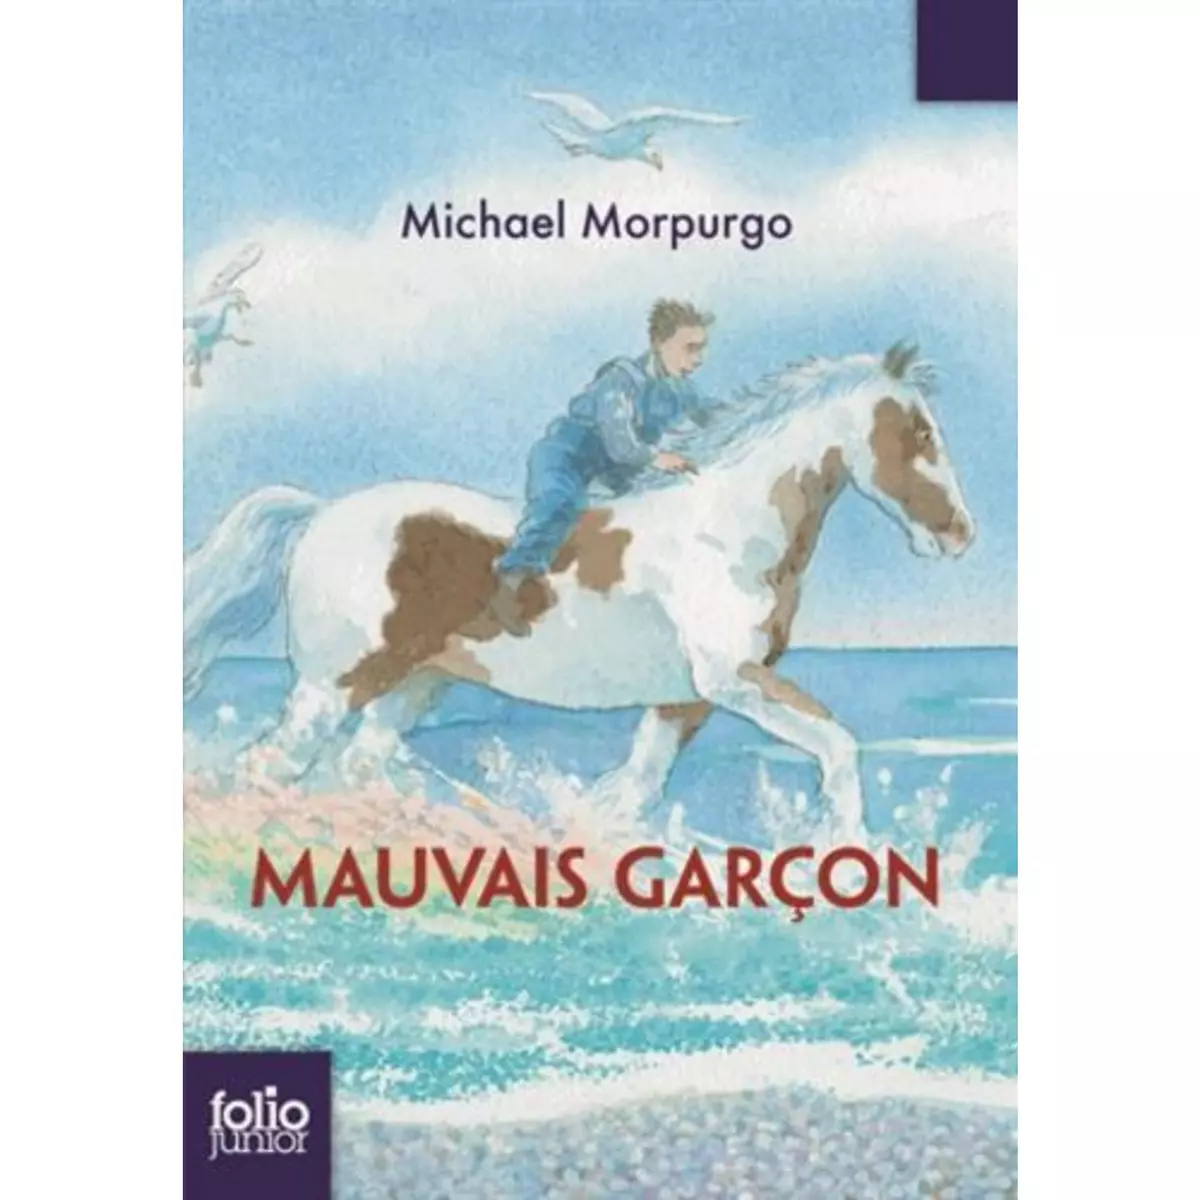  MAUVAIS GARCON, Morpurgo Michael